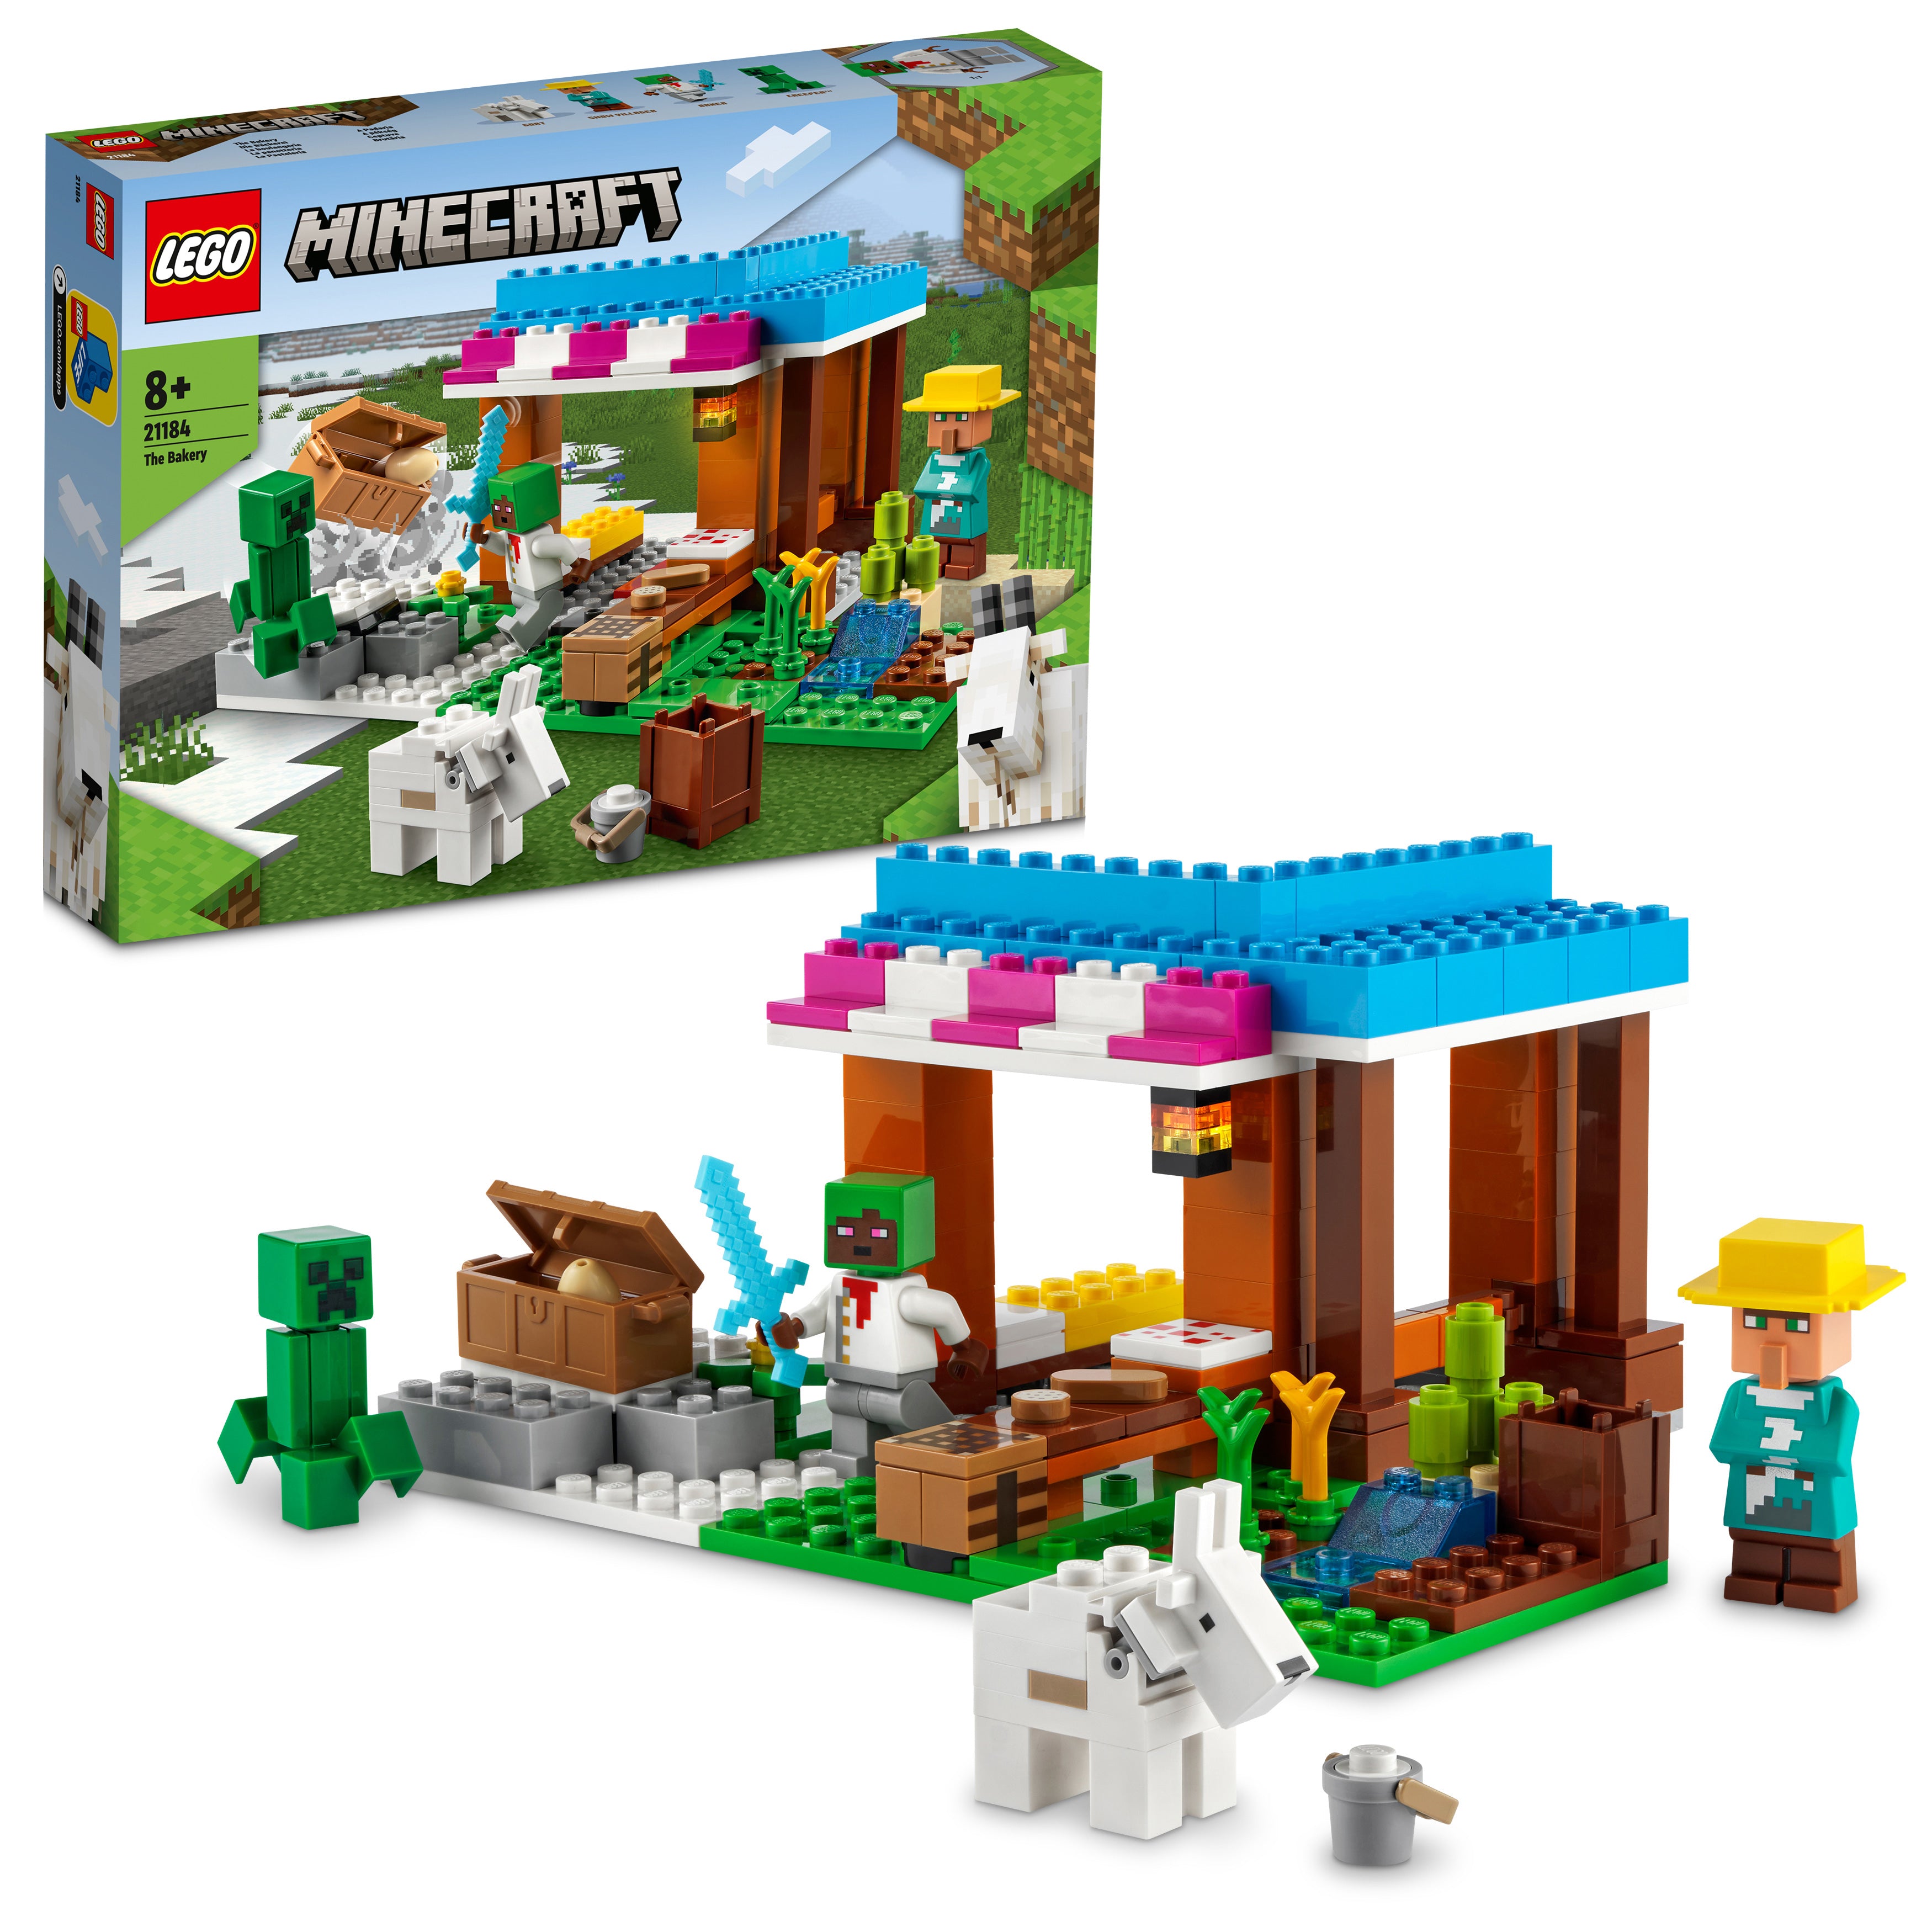 Lego 21184 Minecraft Bakery Village Toy Set